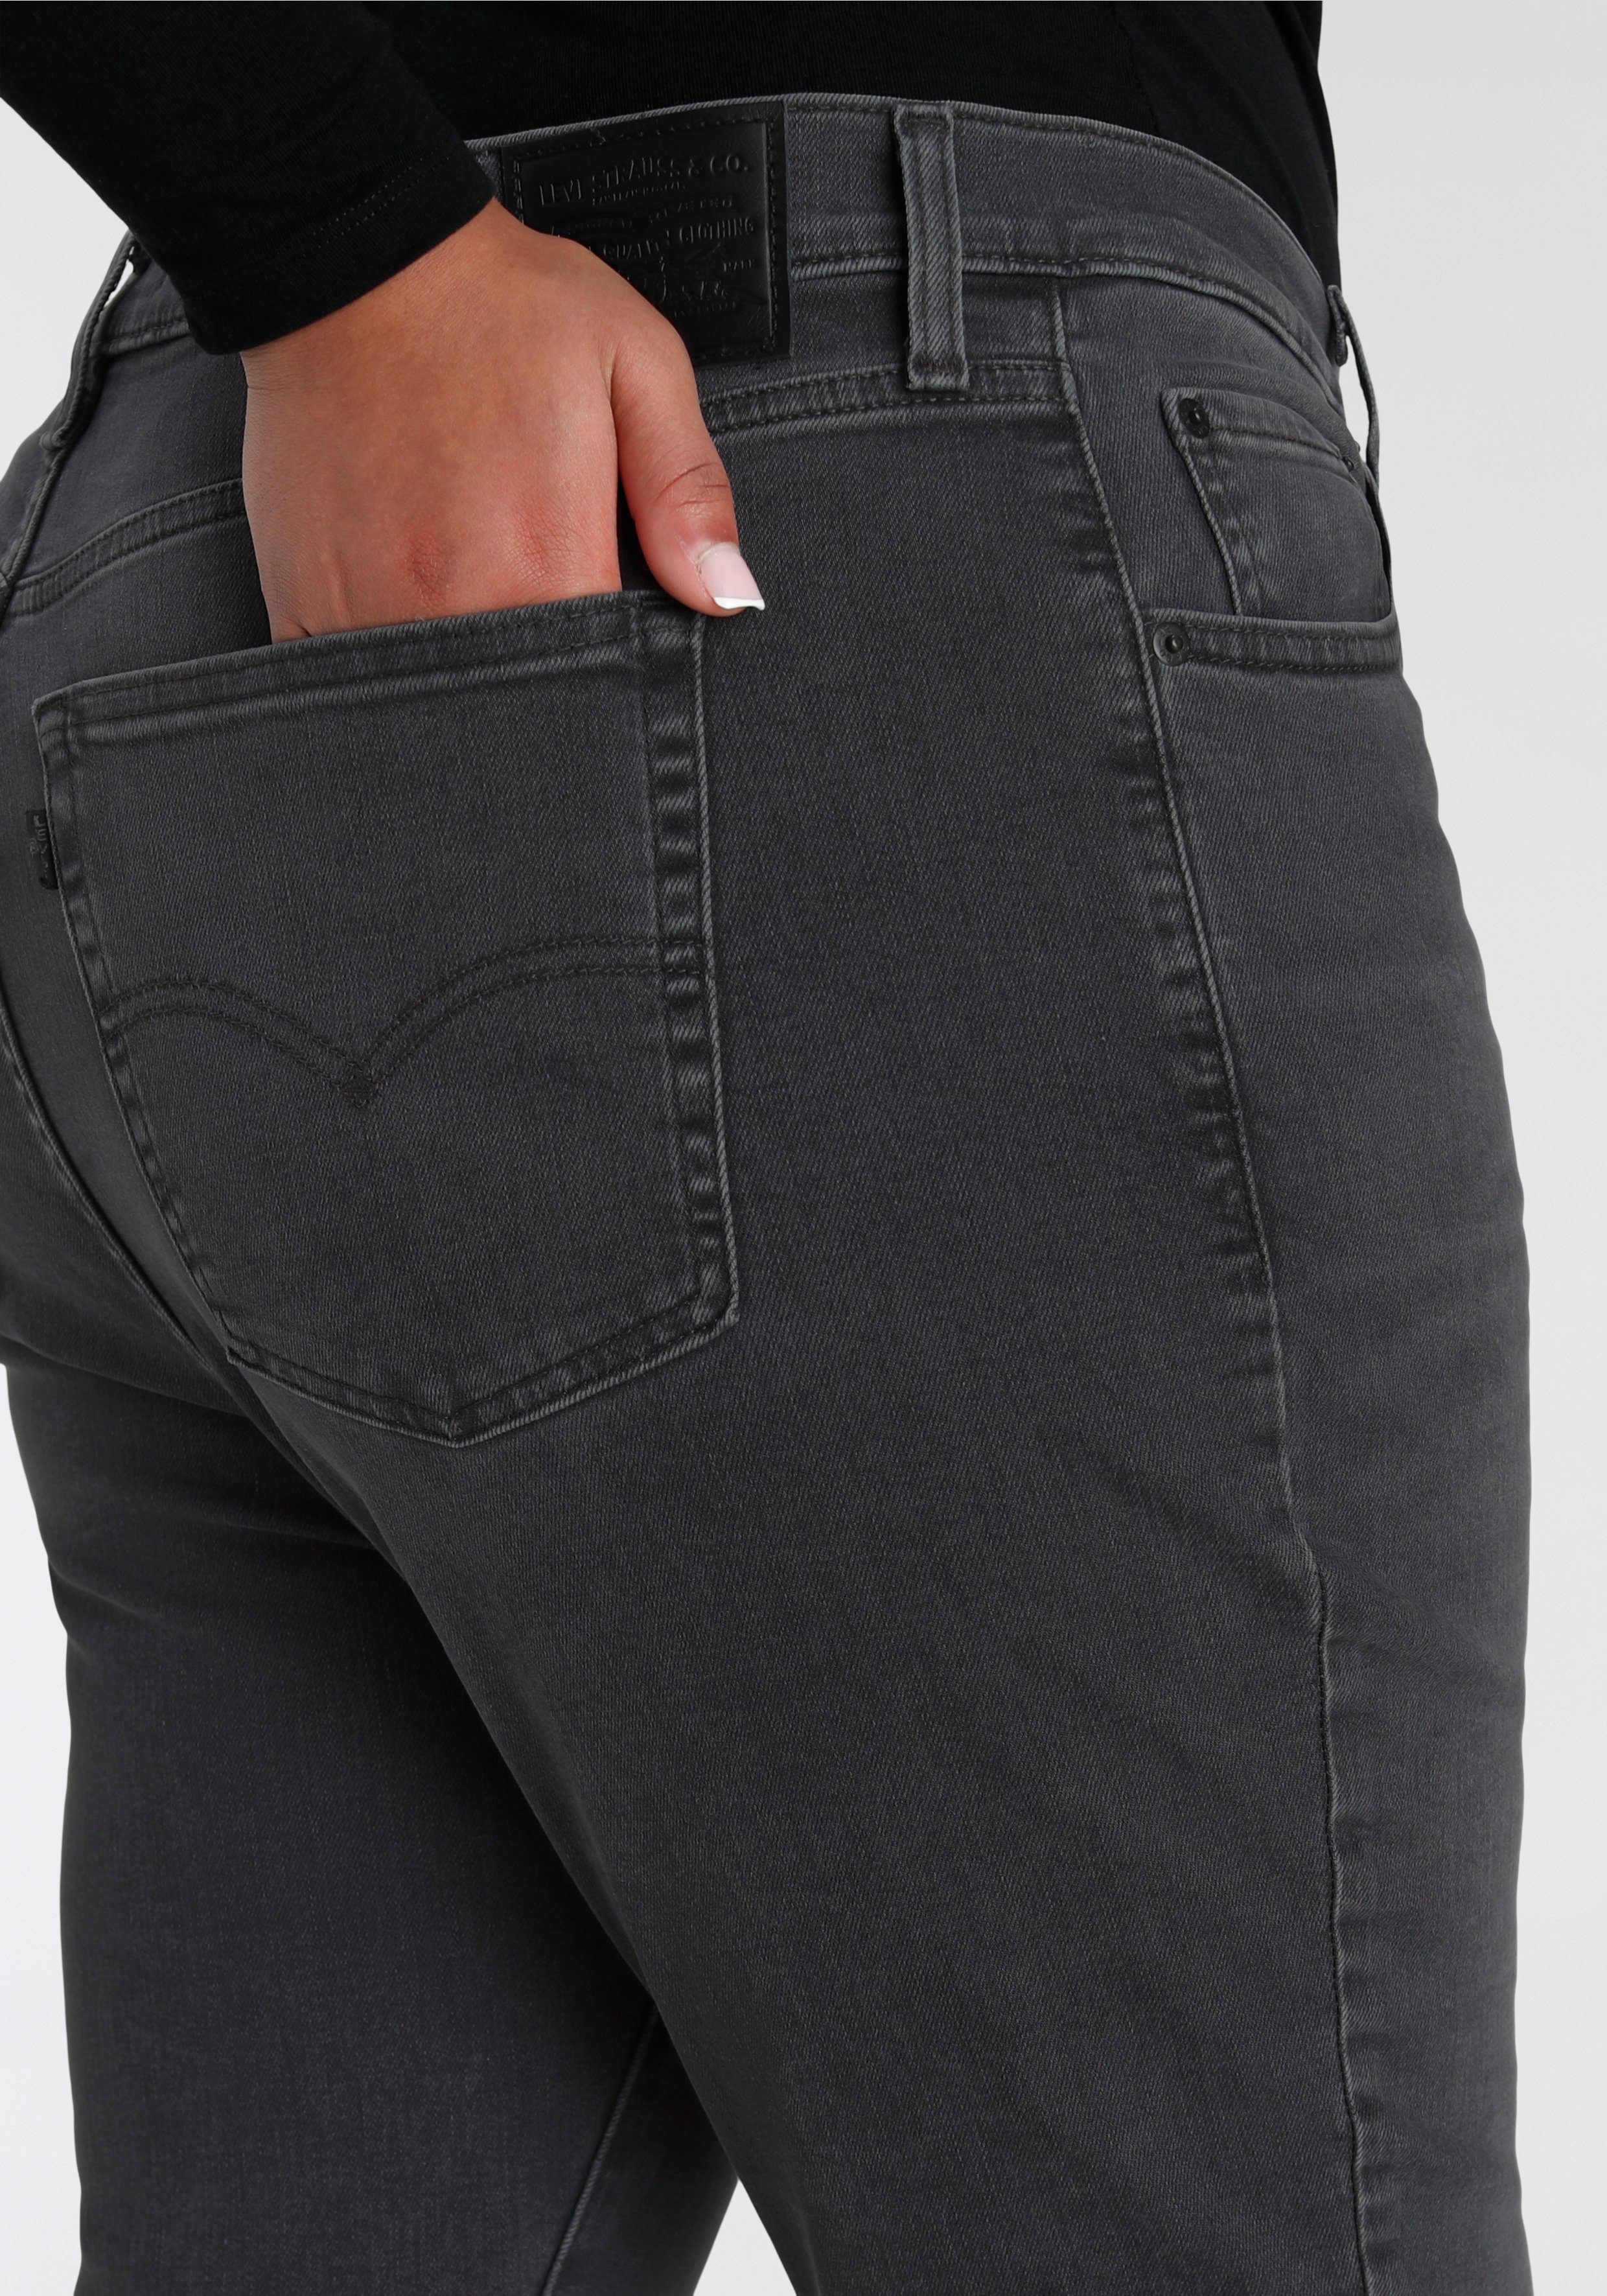 sehr PL Skinny-fit-Jeans HI RISE SKINNY Levi's® black Schnitt Plus 721 figurbetonter